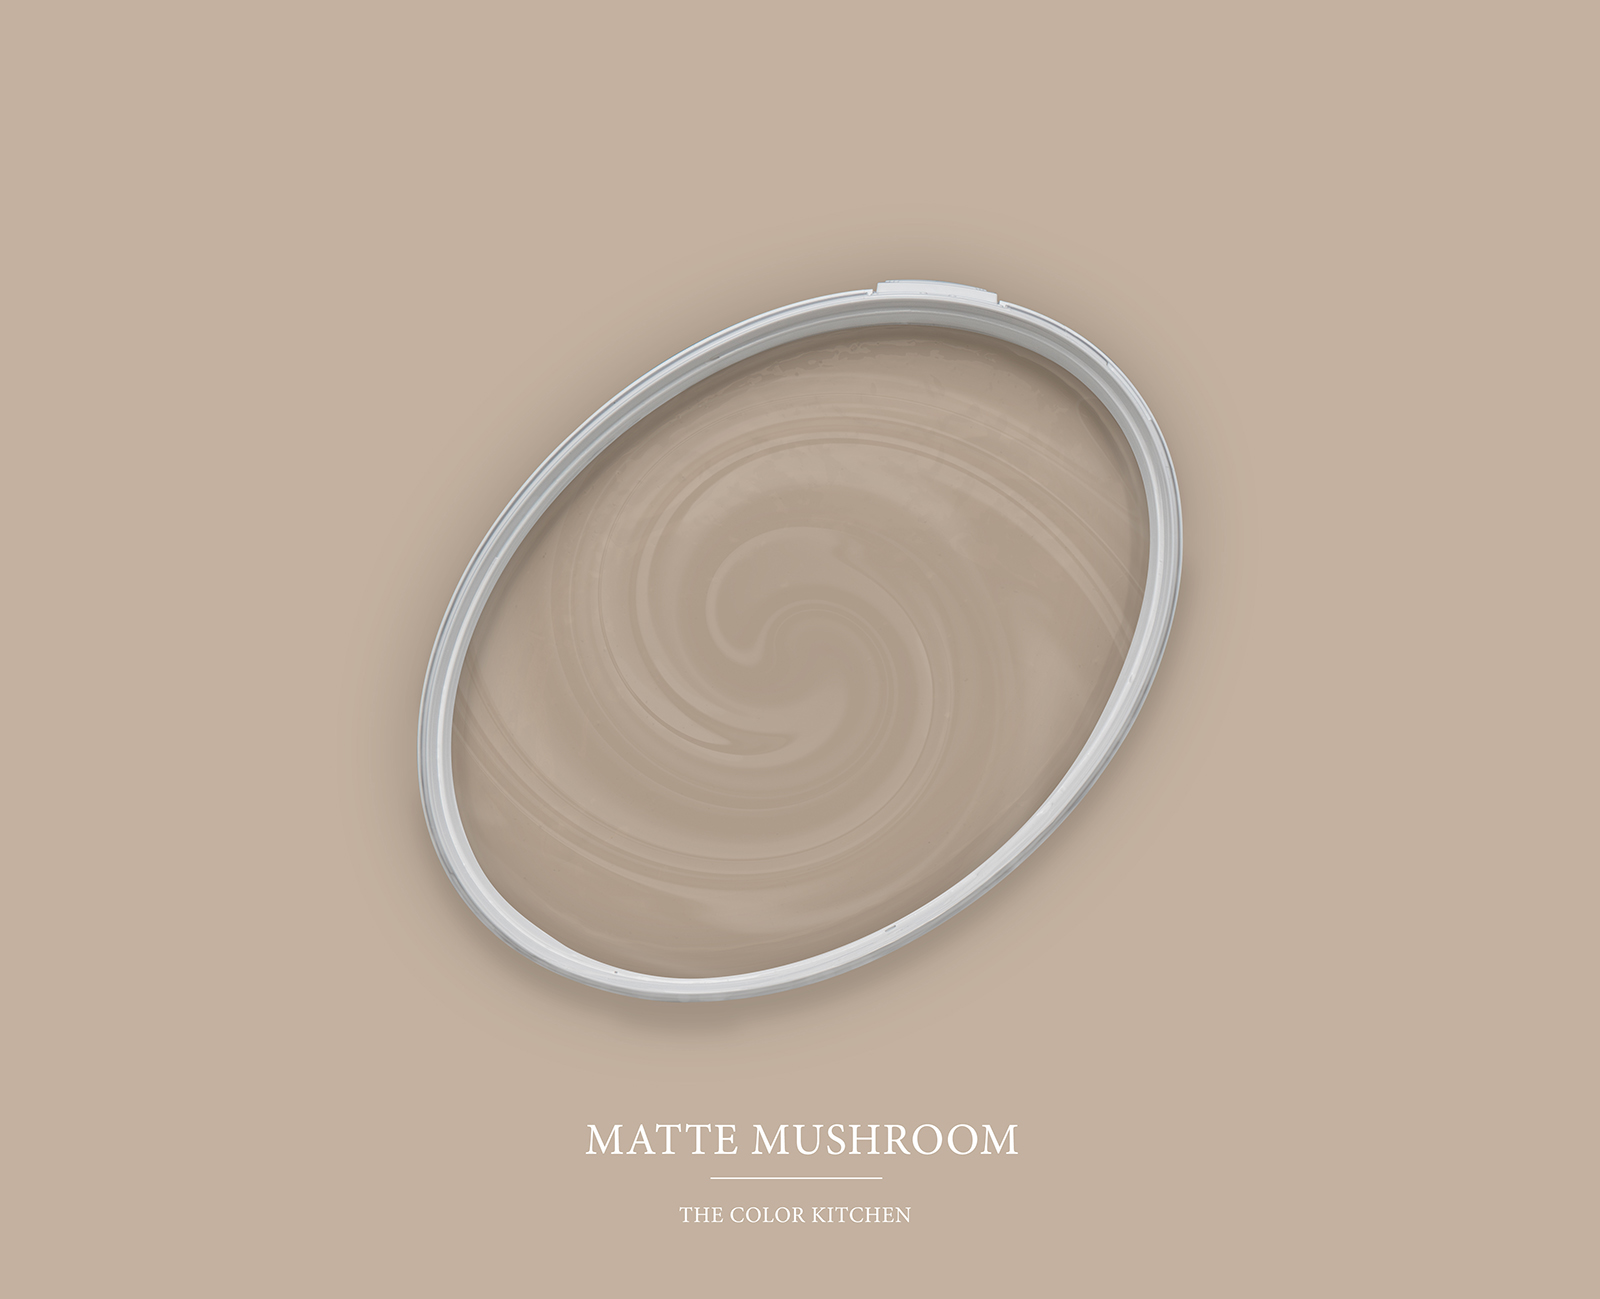         Wall Paint TCK6015 »Matte Mushroom« in homely beige – 2.5 litre
    